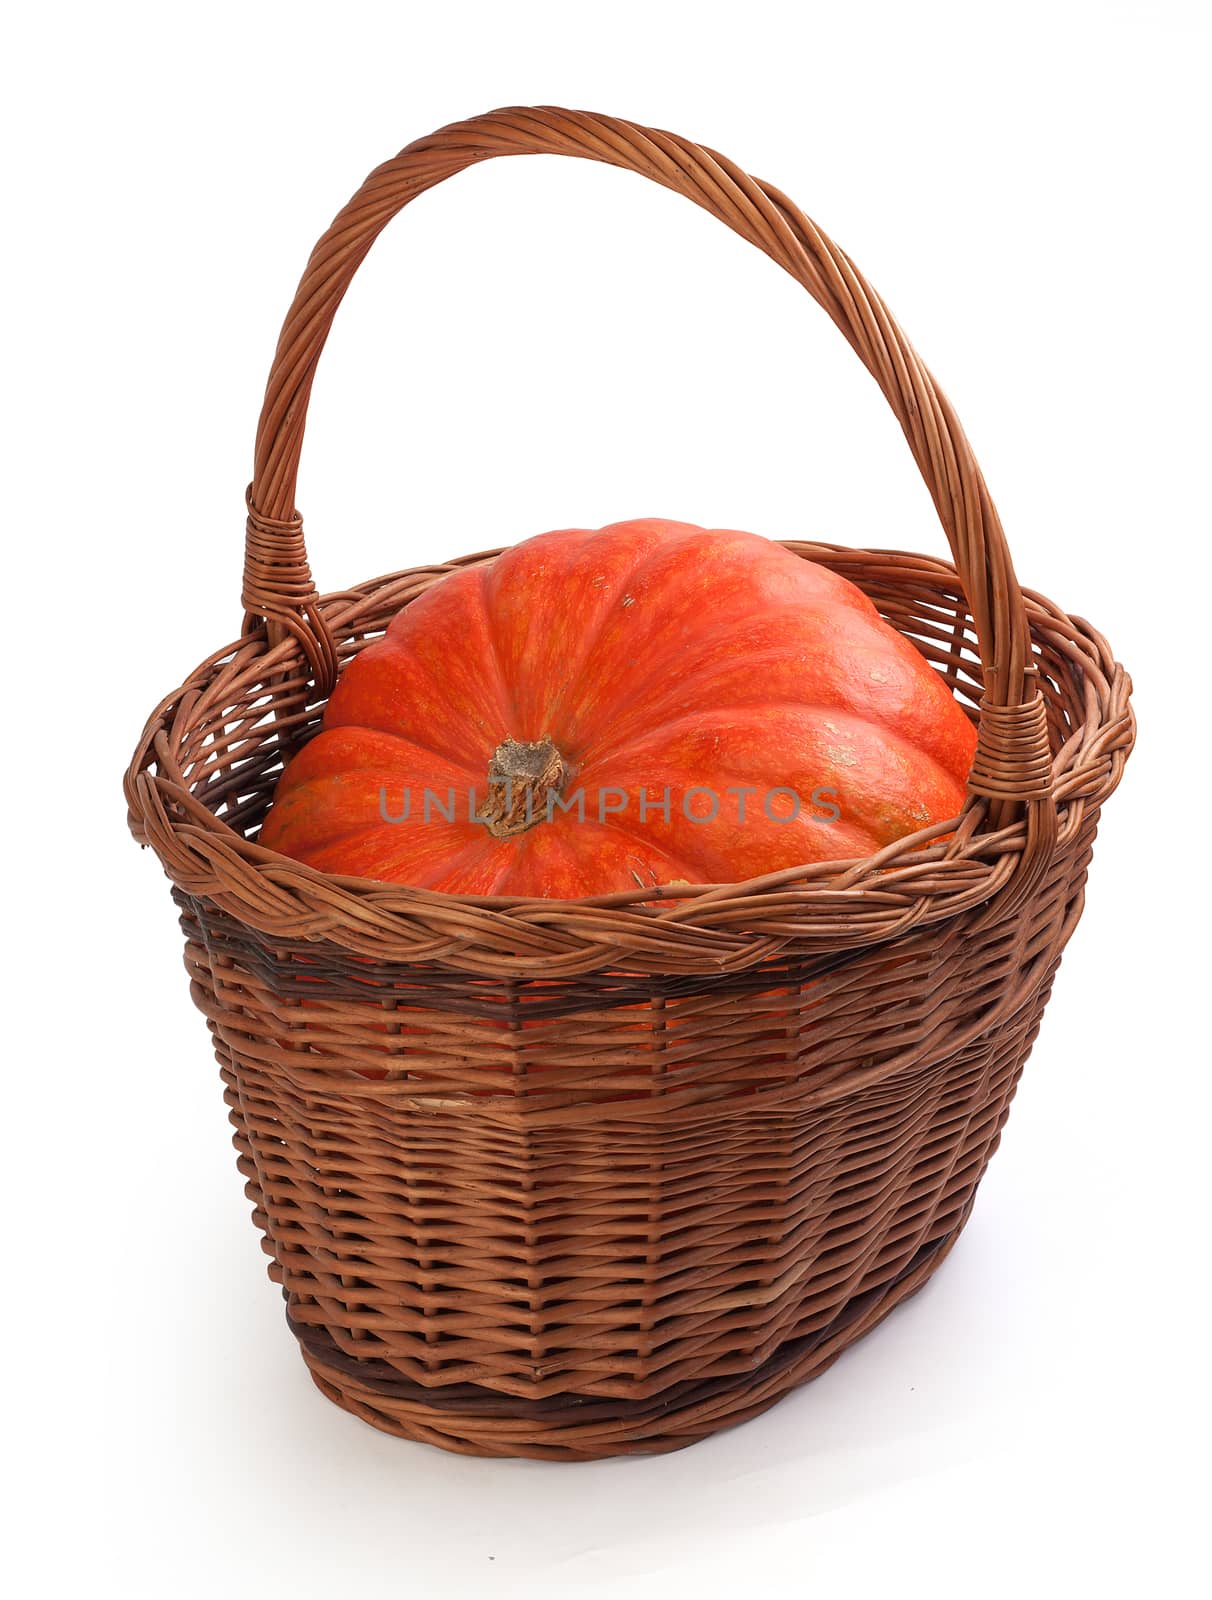 Pumpkin in the basket by Angorius